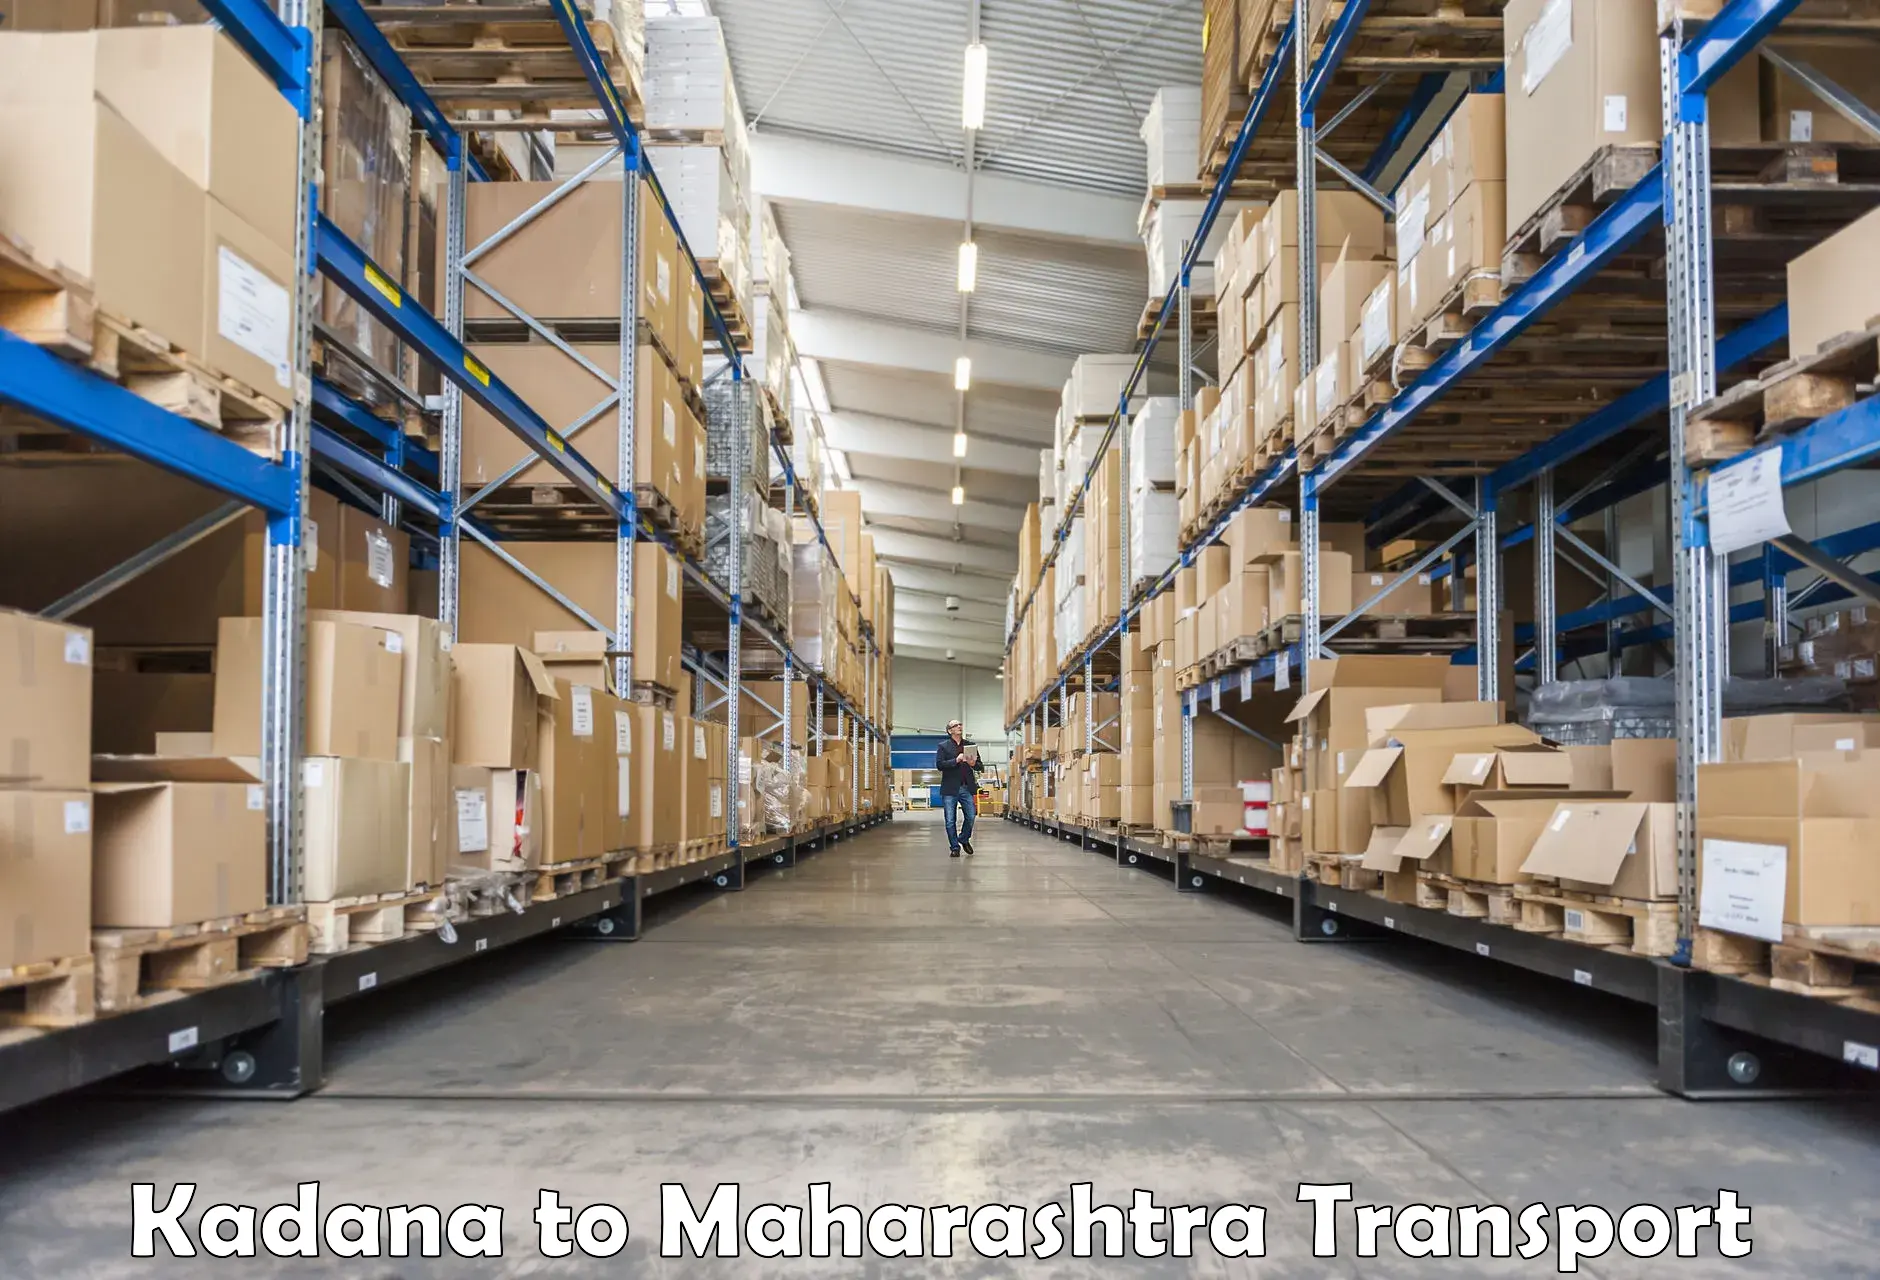 Truck transport companies in India Kadana to Nashik